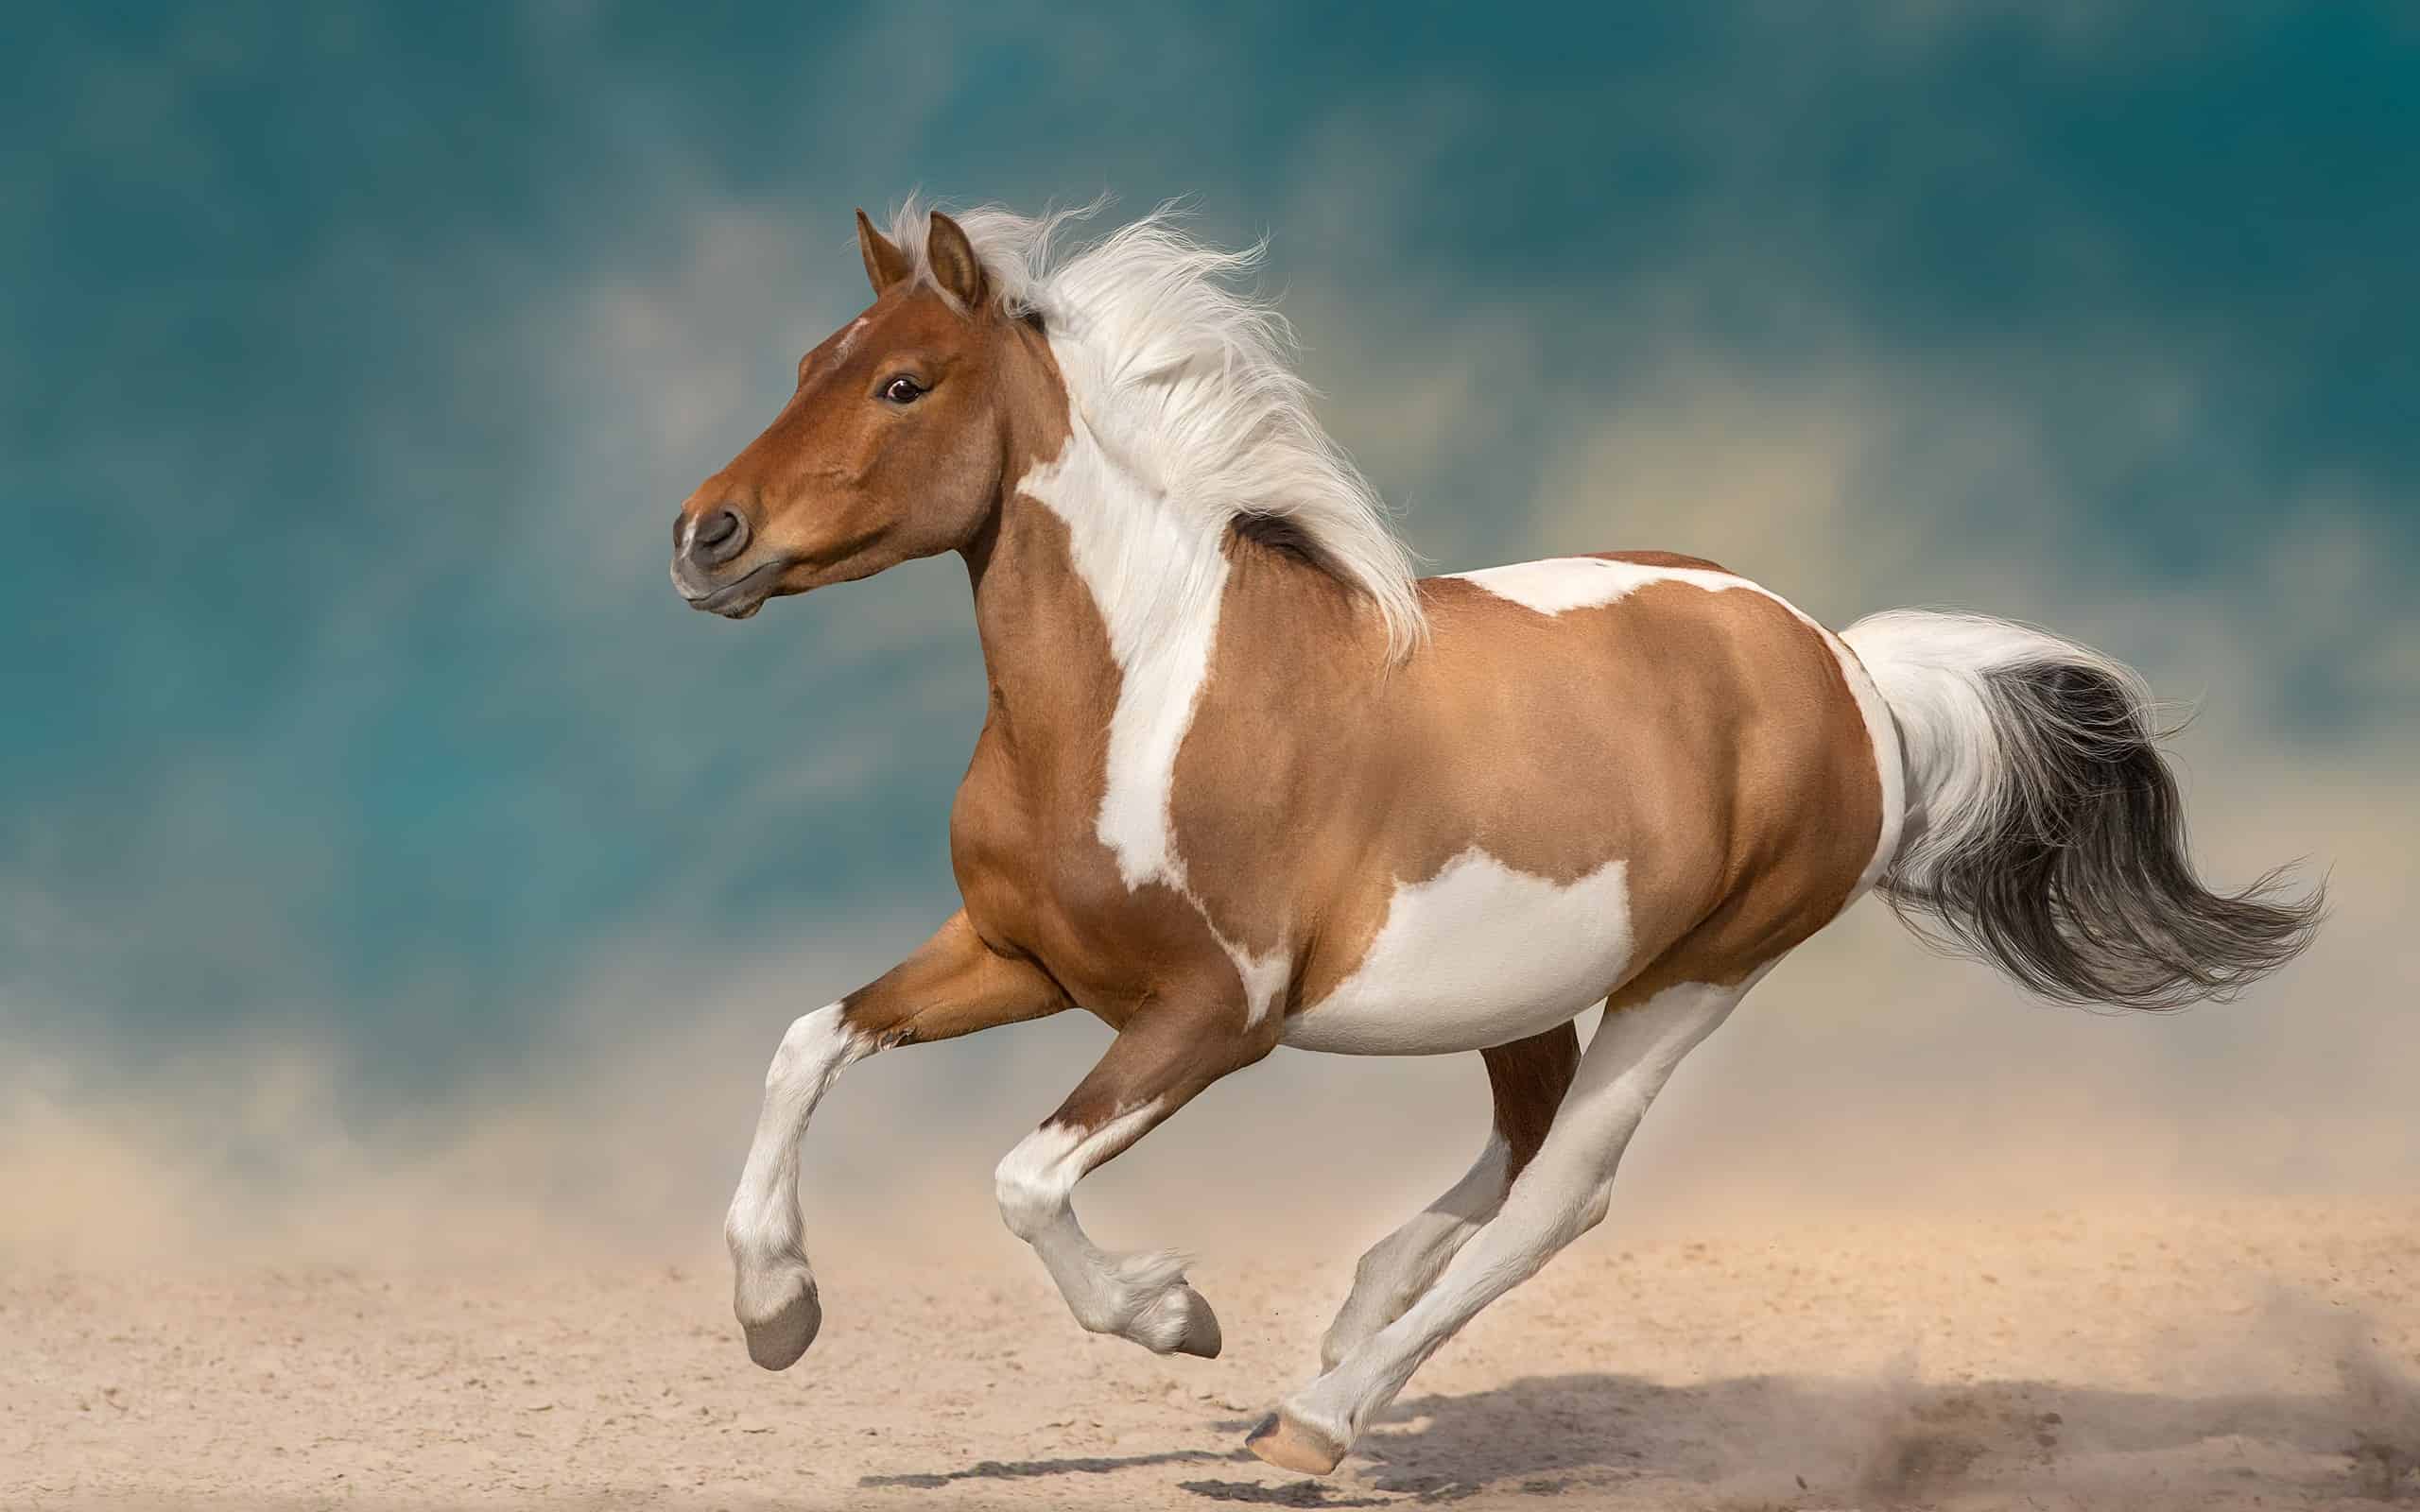 Beautiful pinto horse running on desert storm